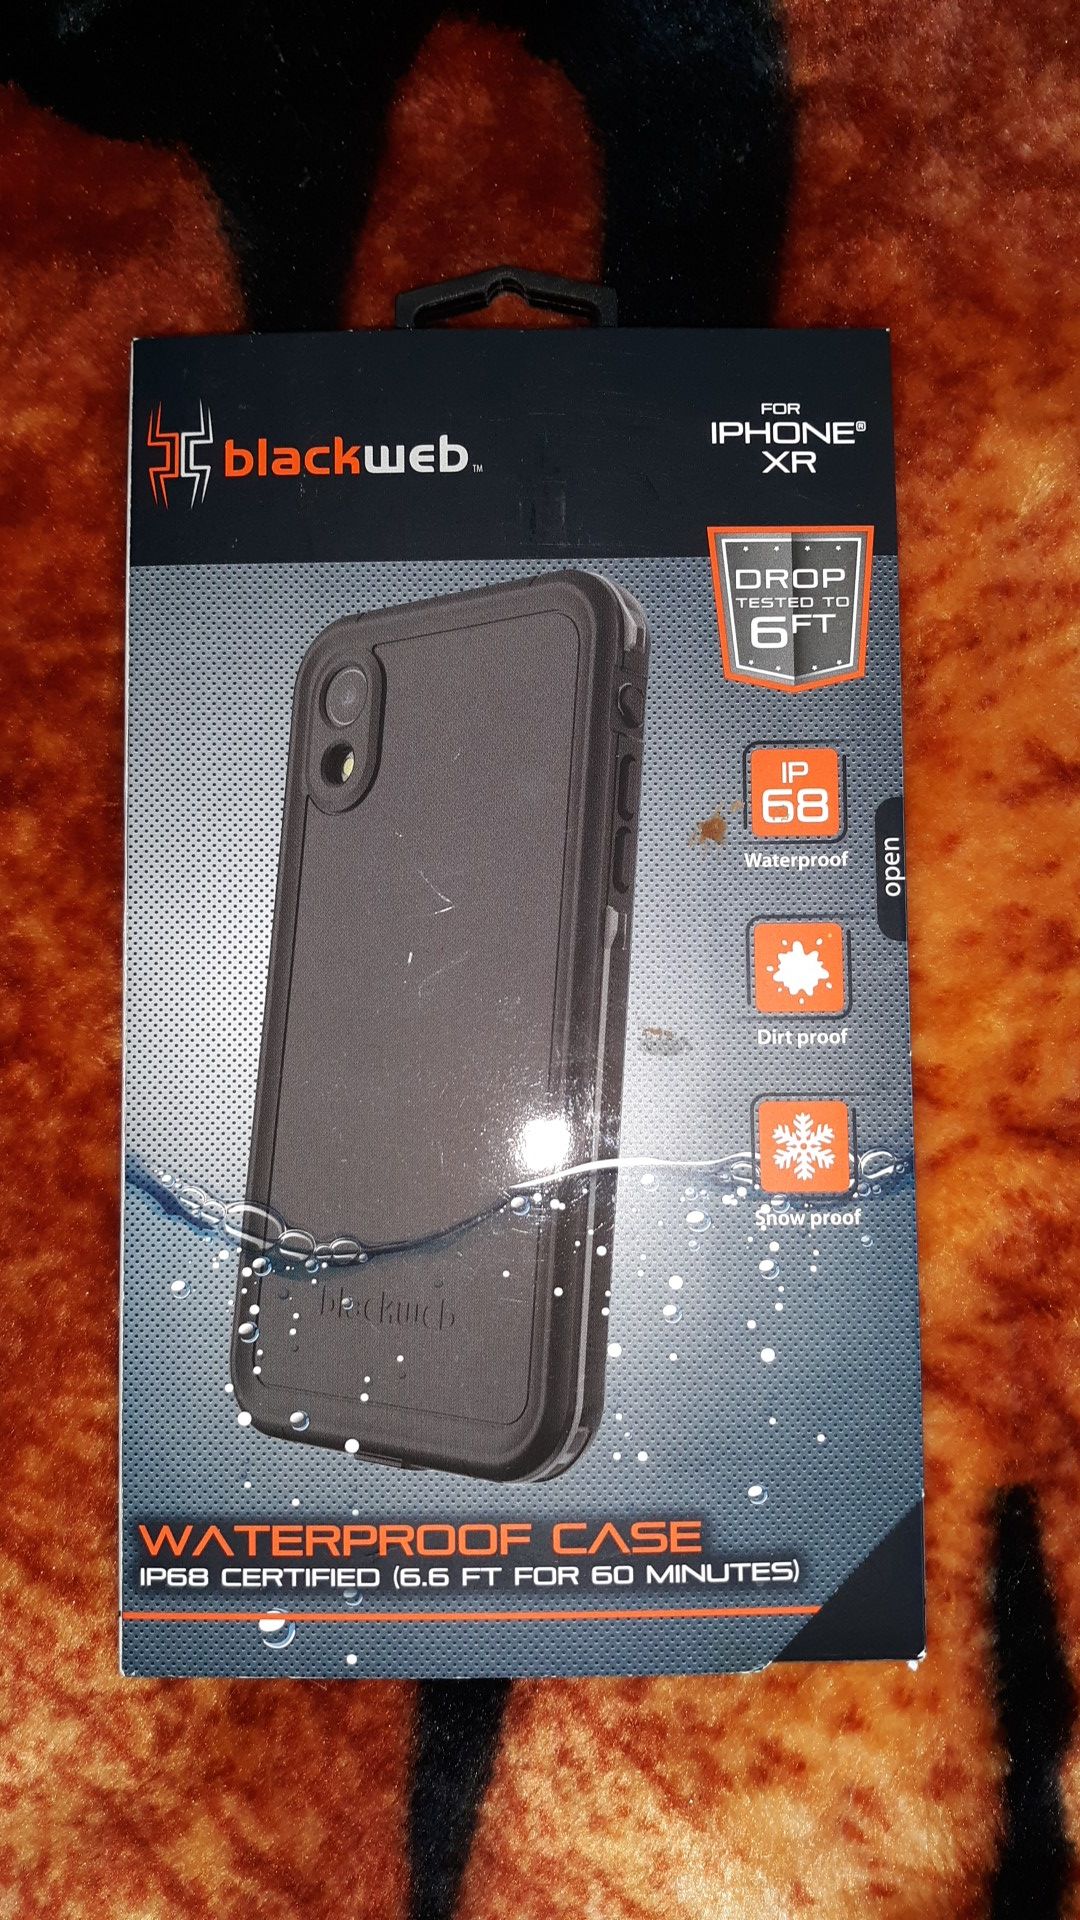 "BLACKWEB Waterproof Case for an iPhone XR